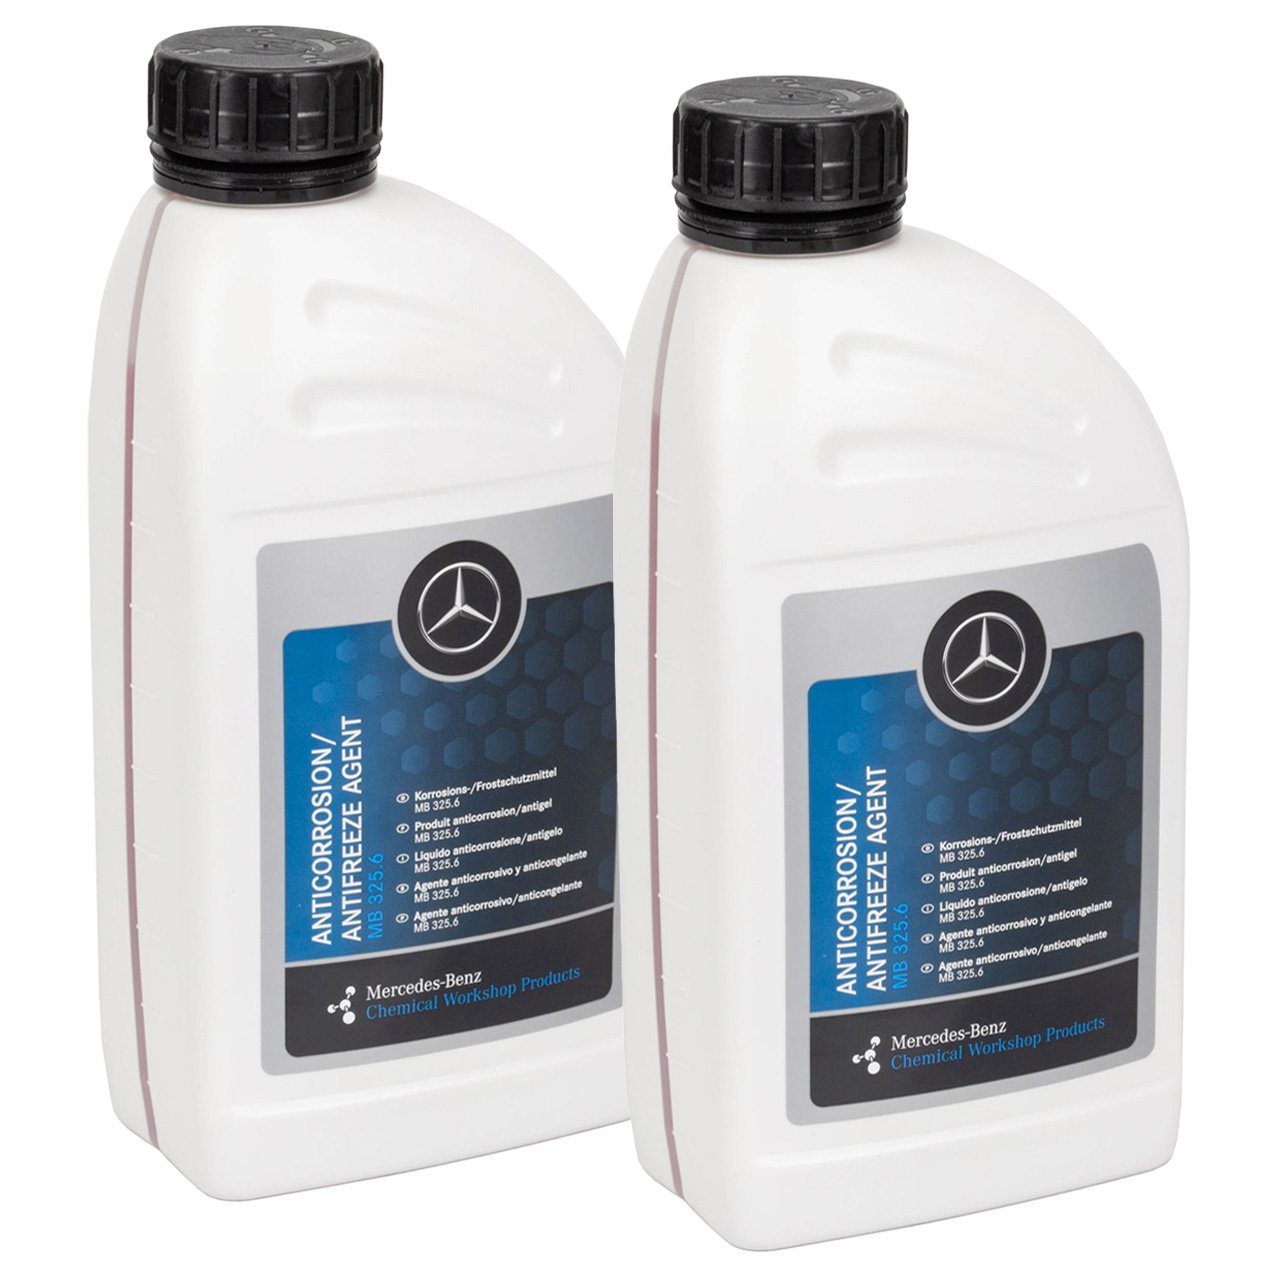 2L 2 Liter ORIGINAL Mercedes Korrosions- Frostschutzmittel MB 325.6 000989180809